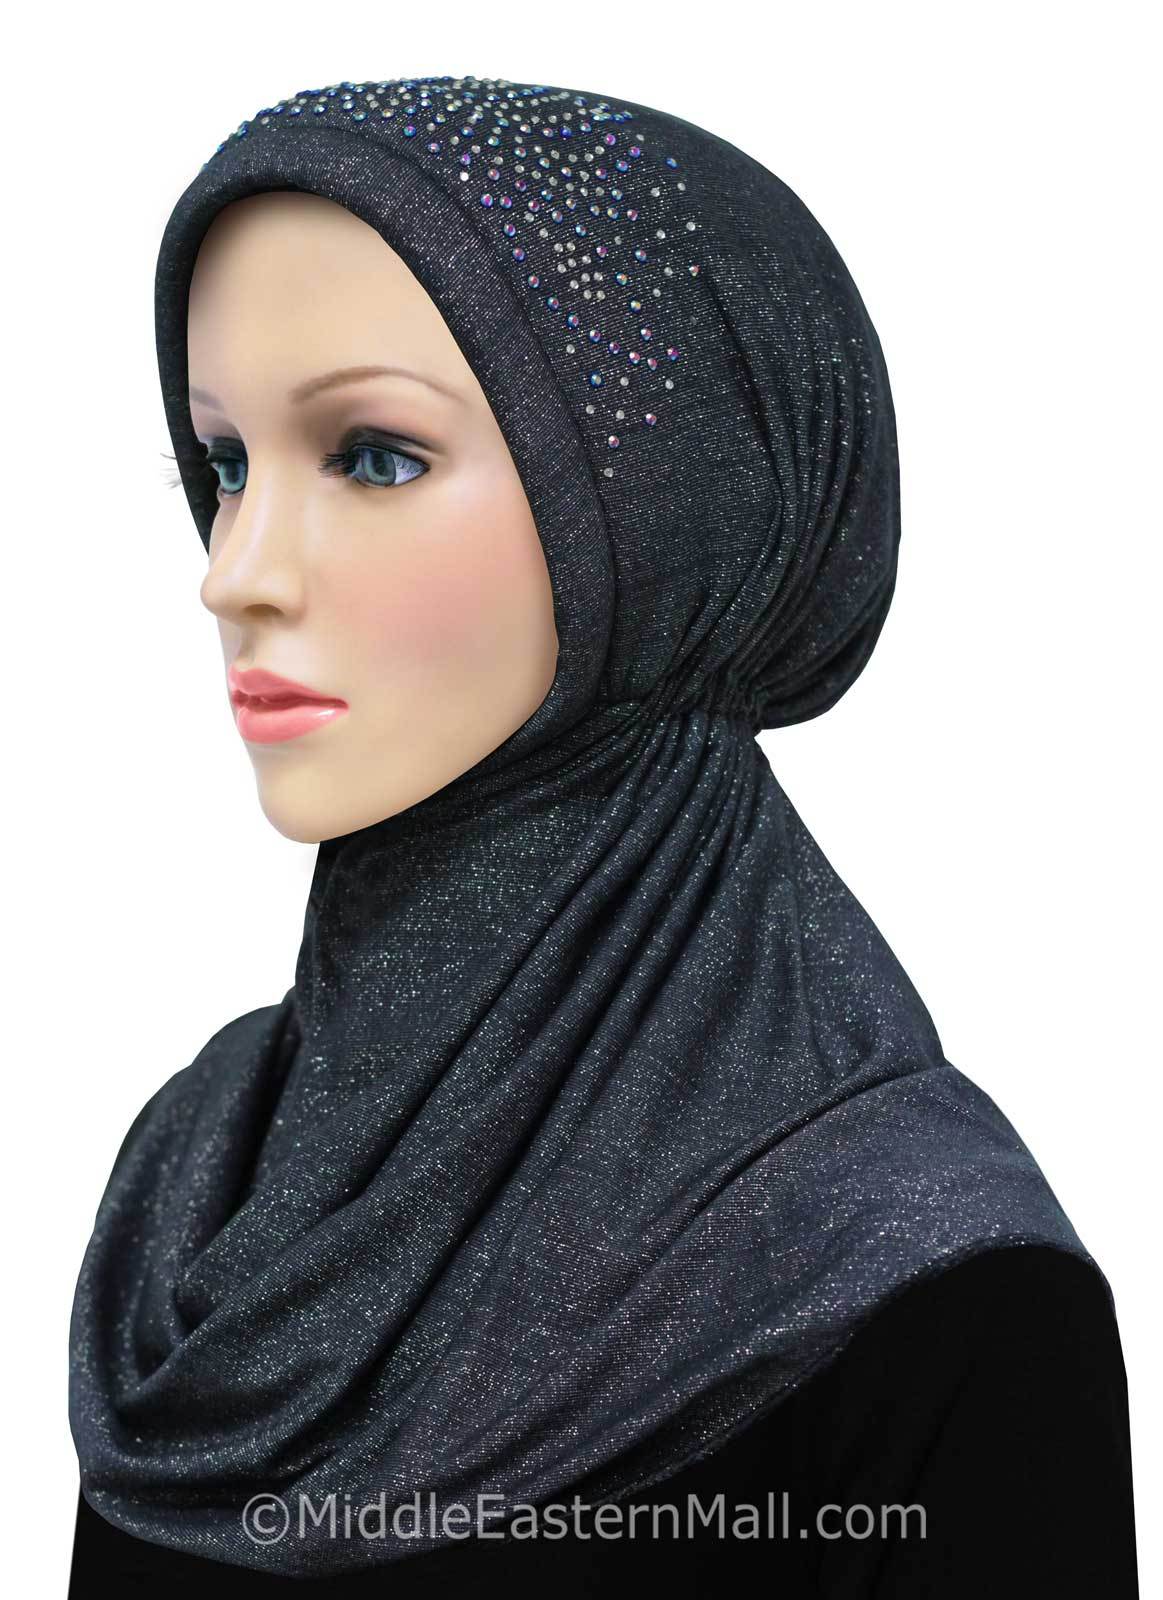 Wholesale Set of 6 Khatib Turban Easy Pull-on Hijab CLOSEOUT CLEARANCE